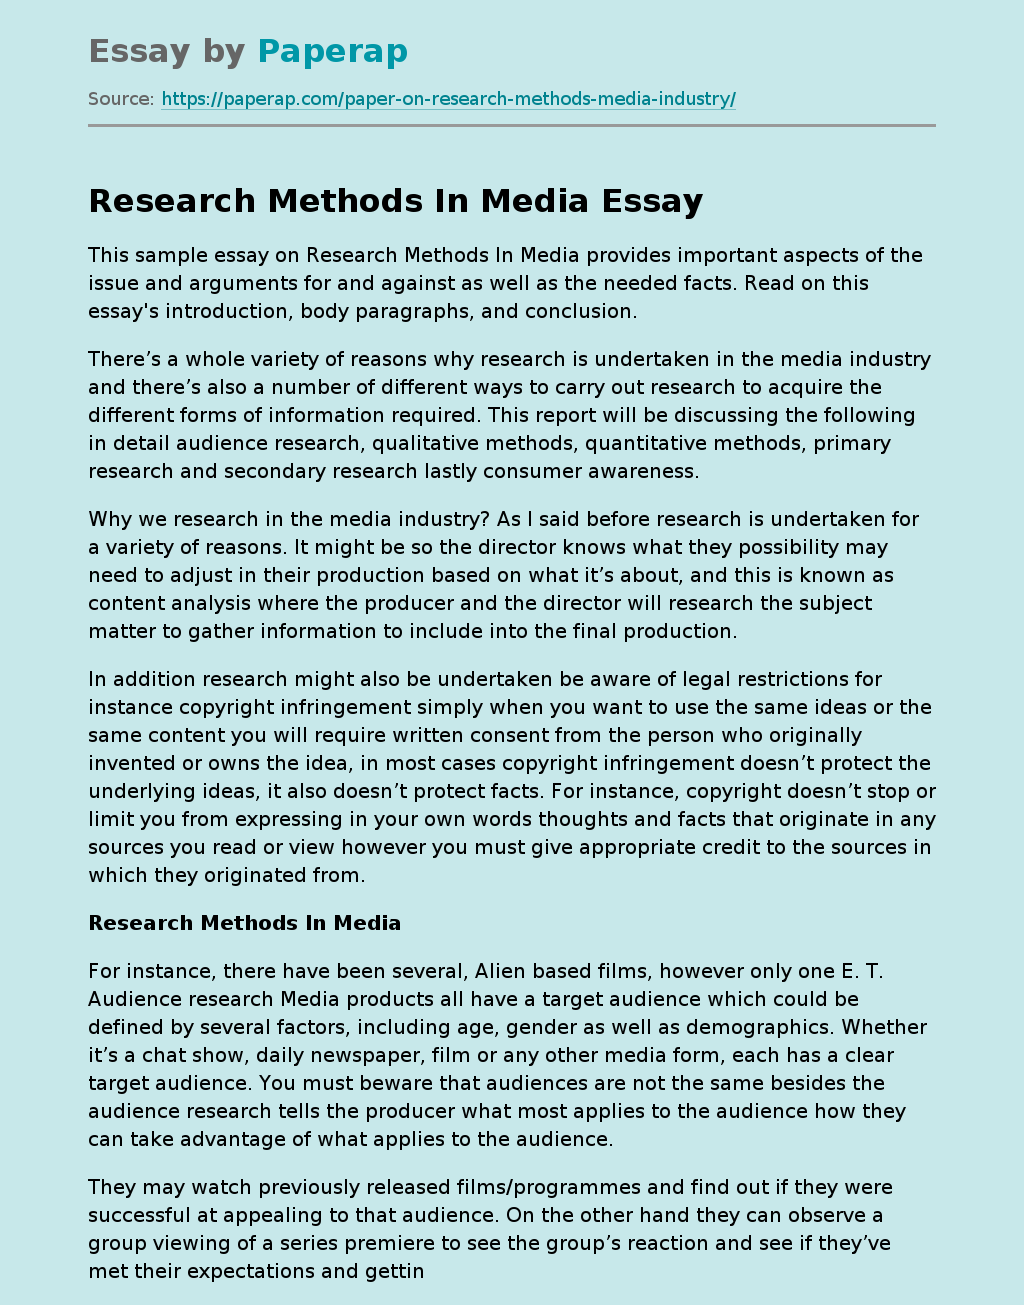 Research Methods In Media